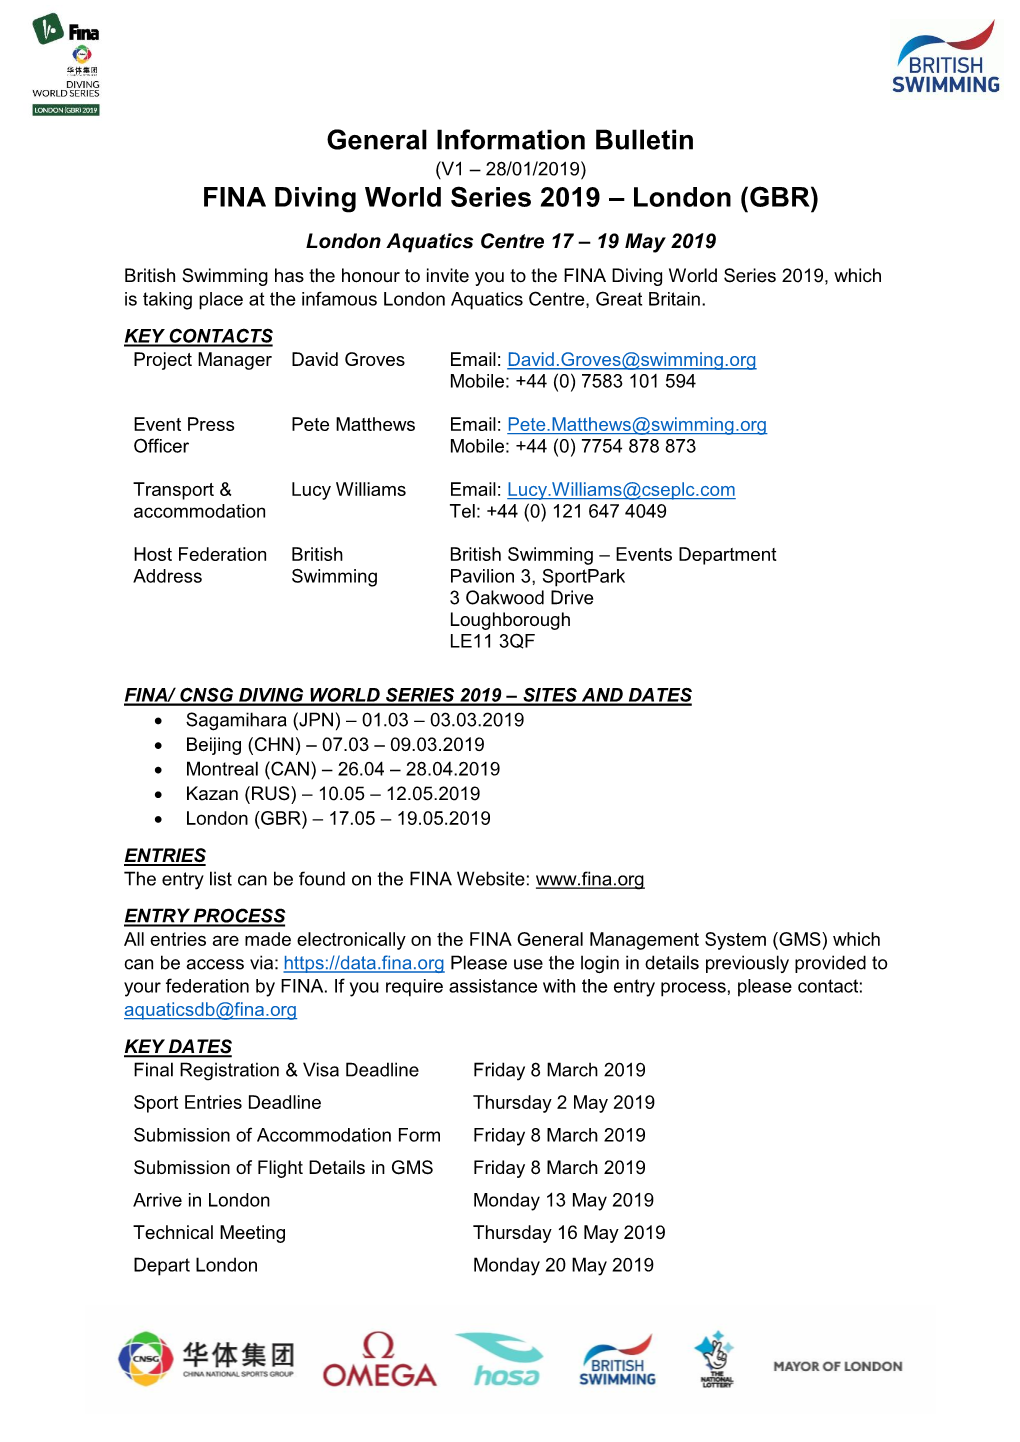 General Information Bulletin FINA Diving World Series 2019 – London